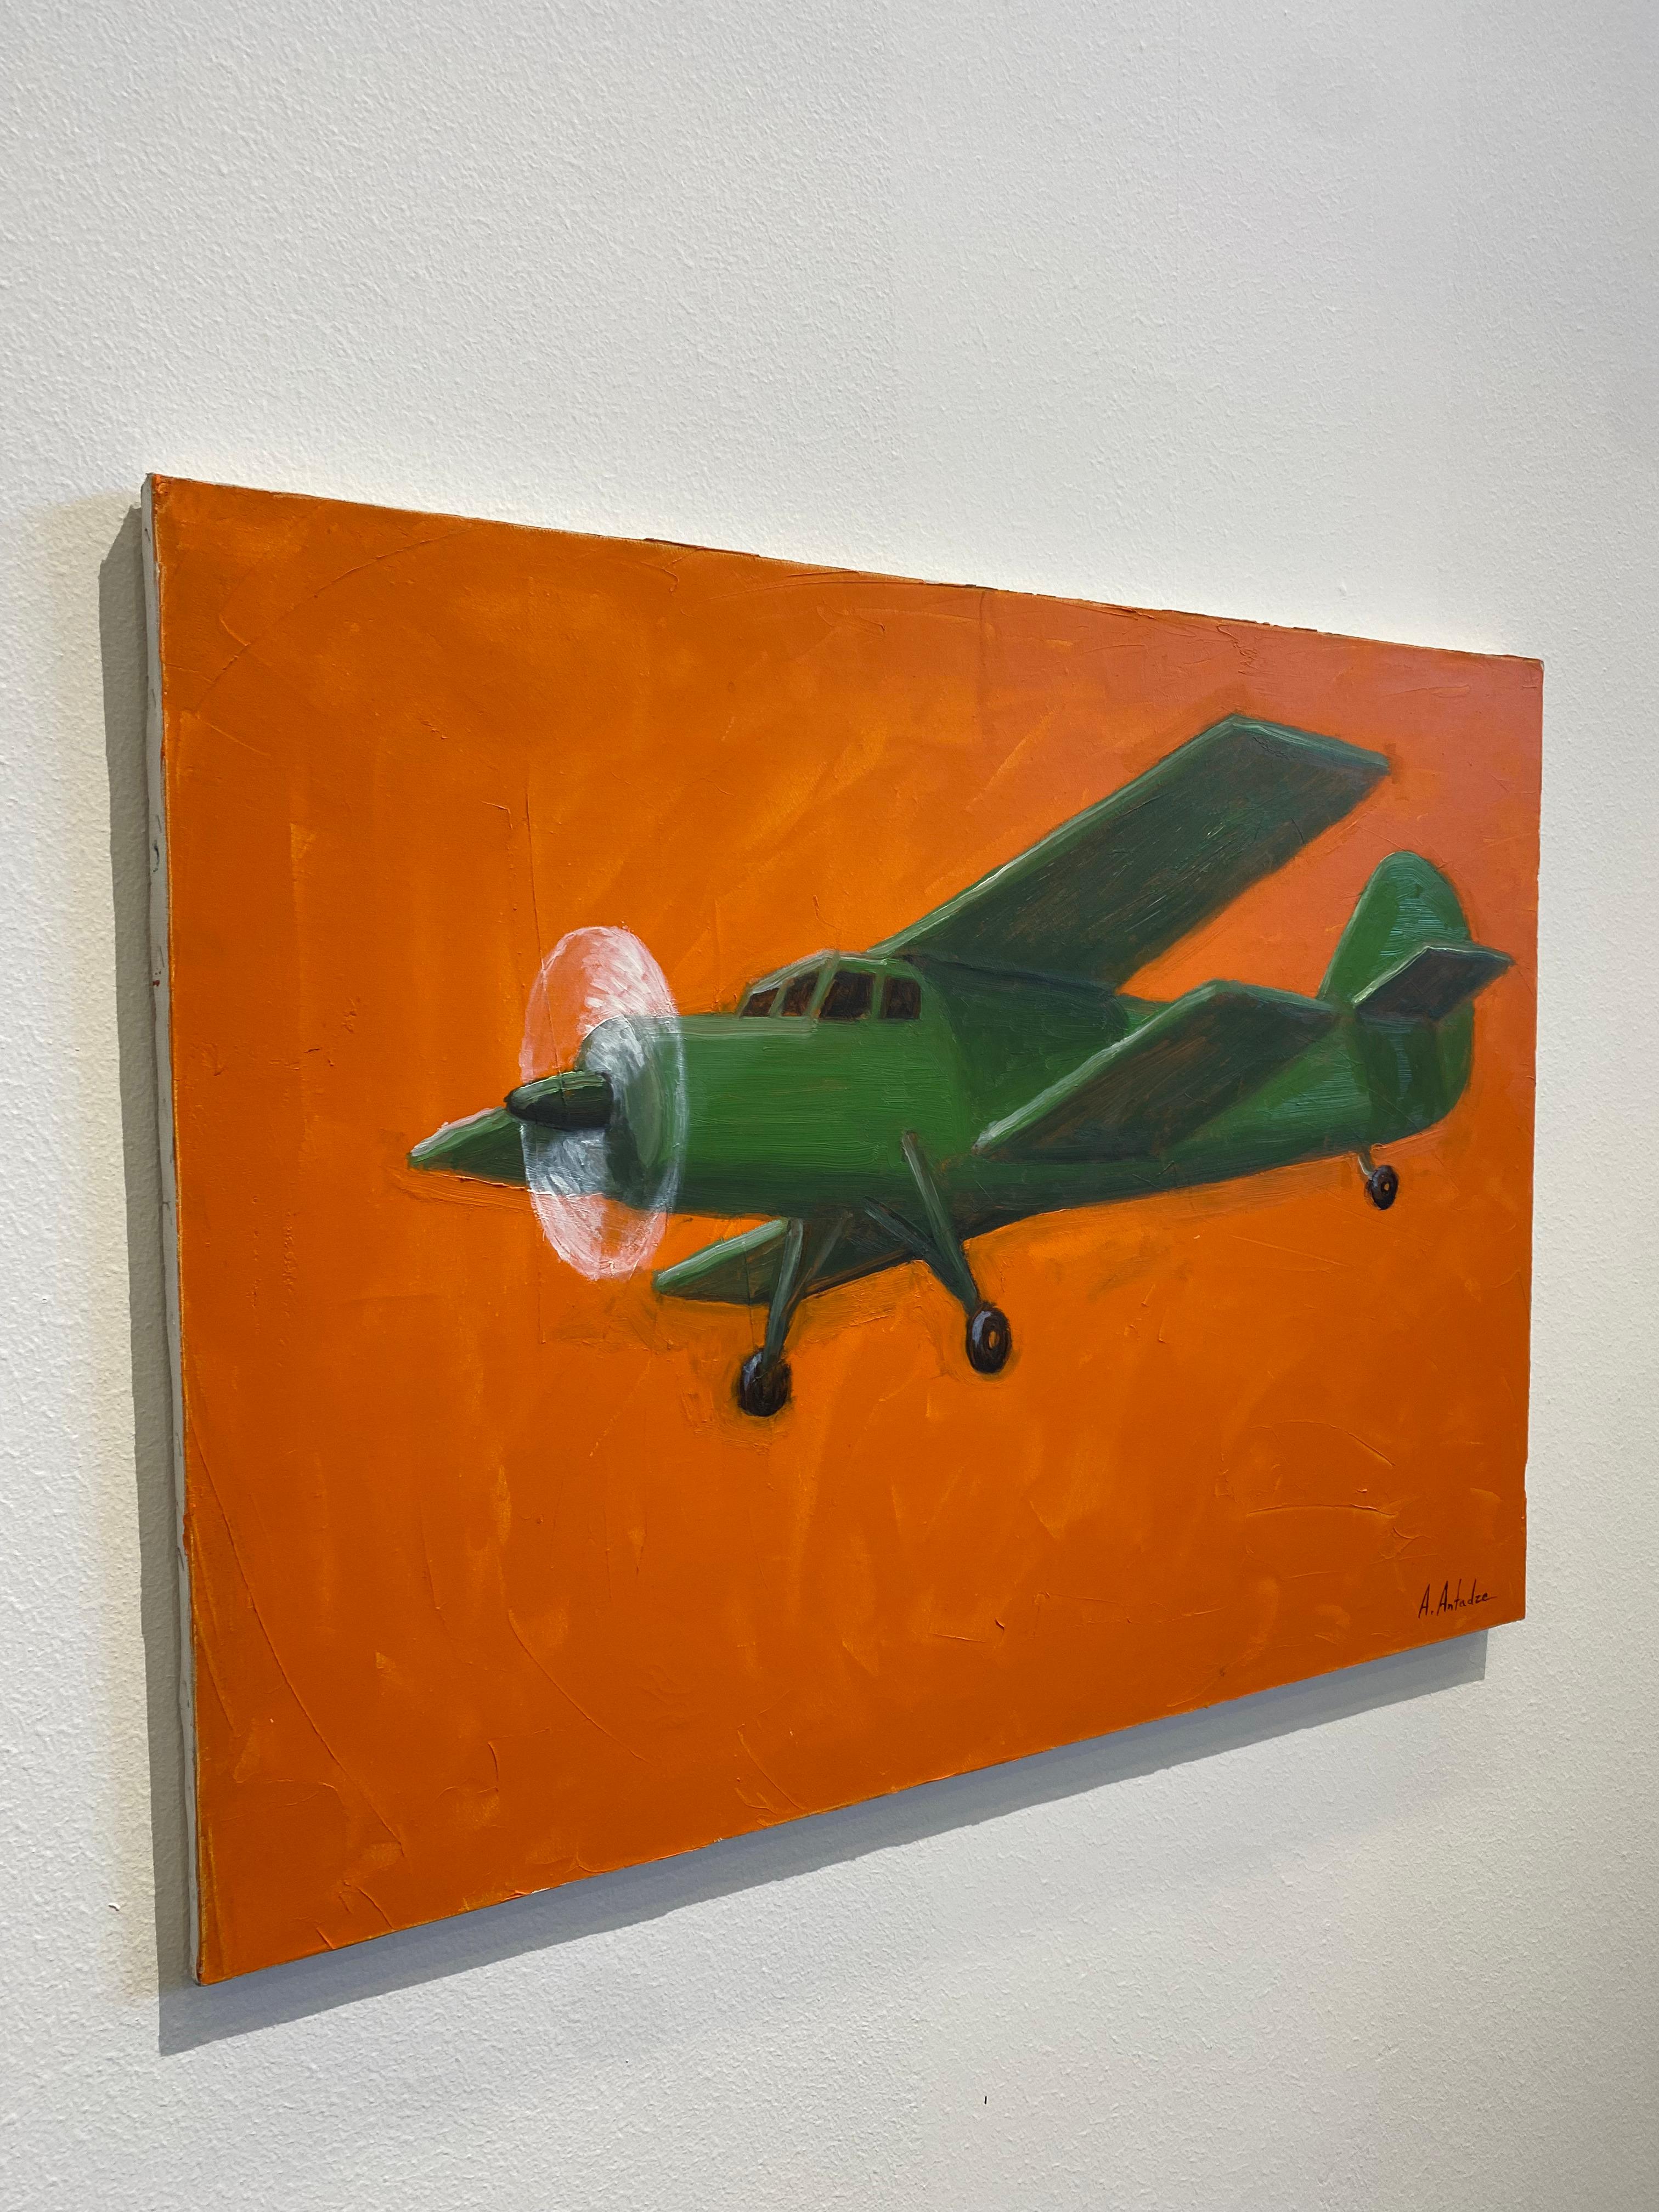 Georgian Contemporary Art by Alexander Sandro Antadze - Green Plane For Sale 11